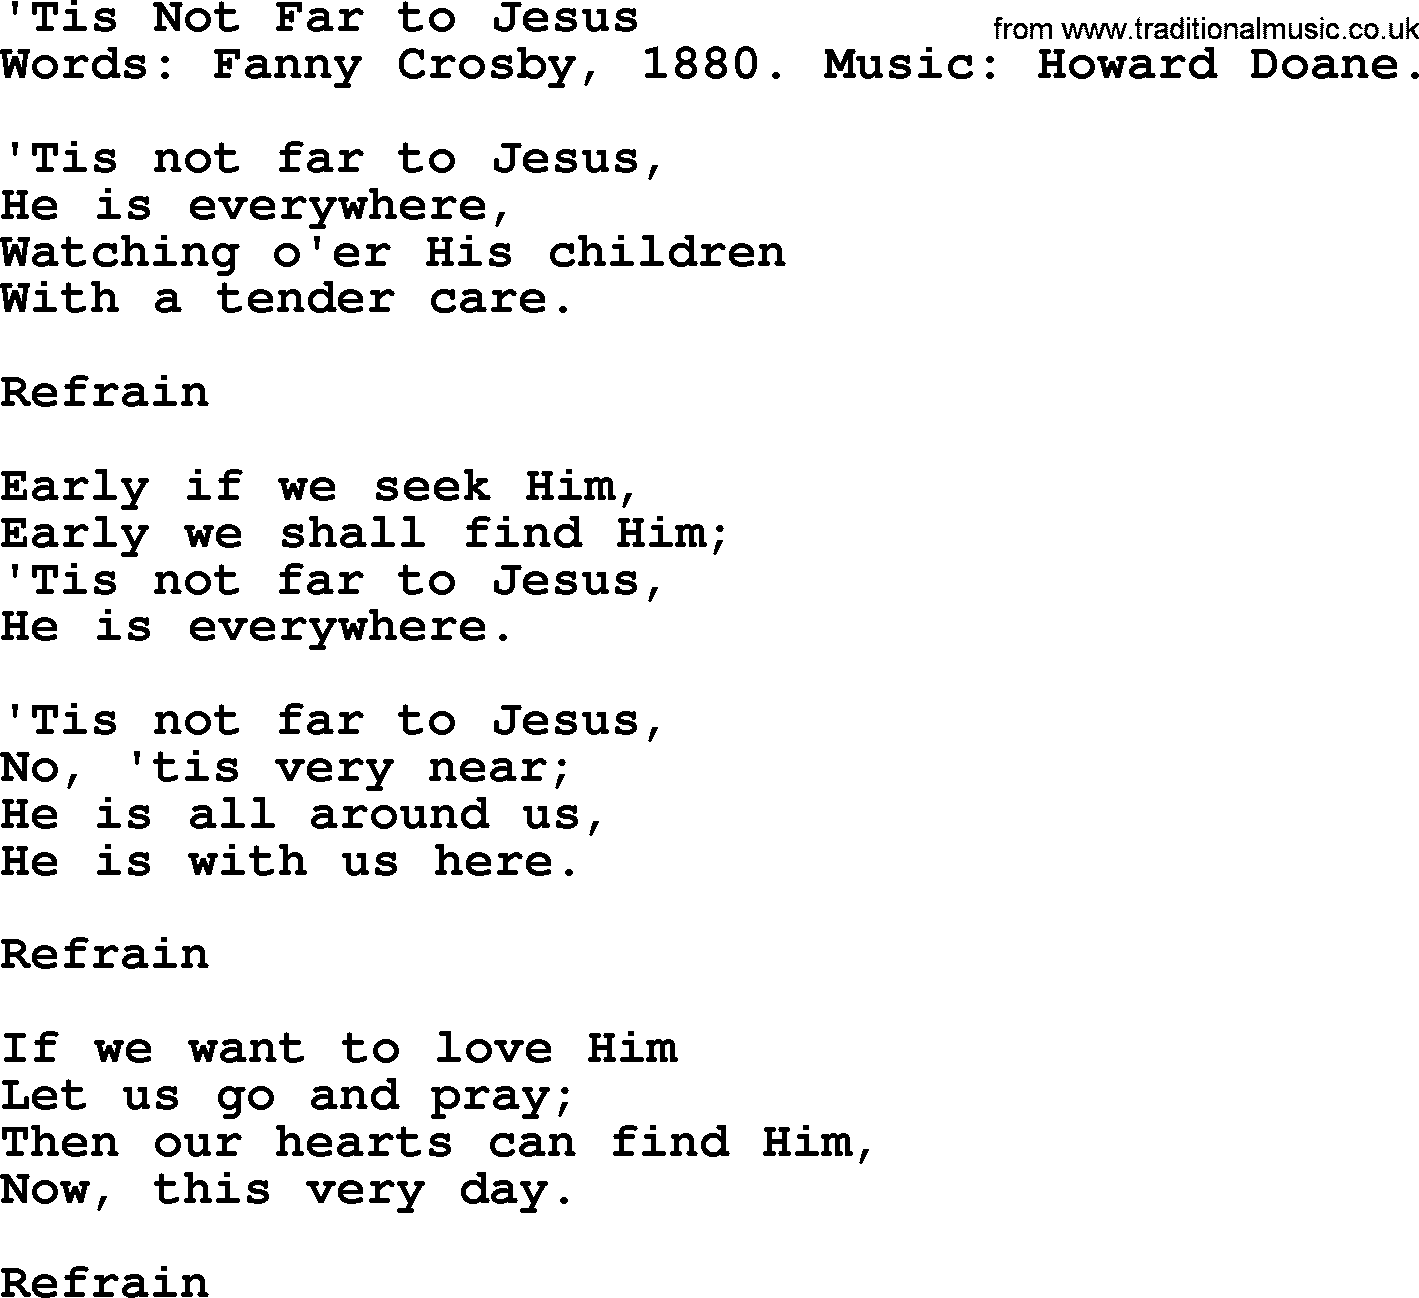 Fanny Crosby song: Tis Not Far To Jesus, lyrics